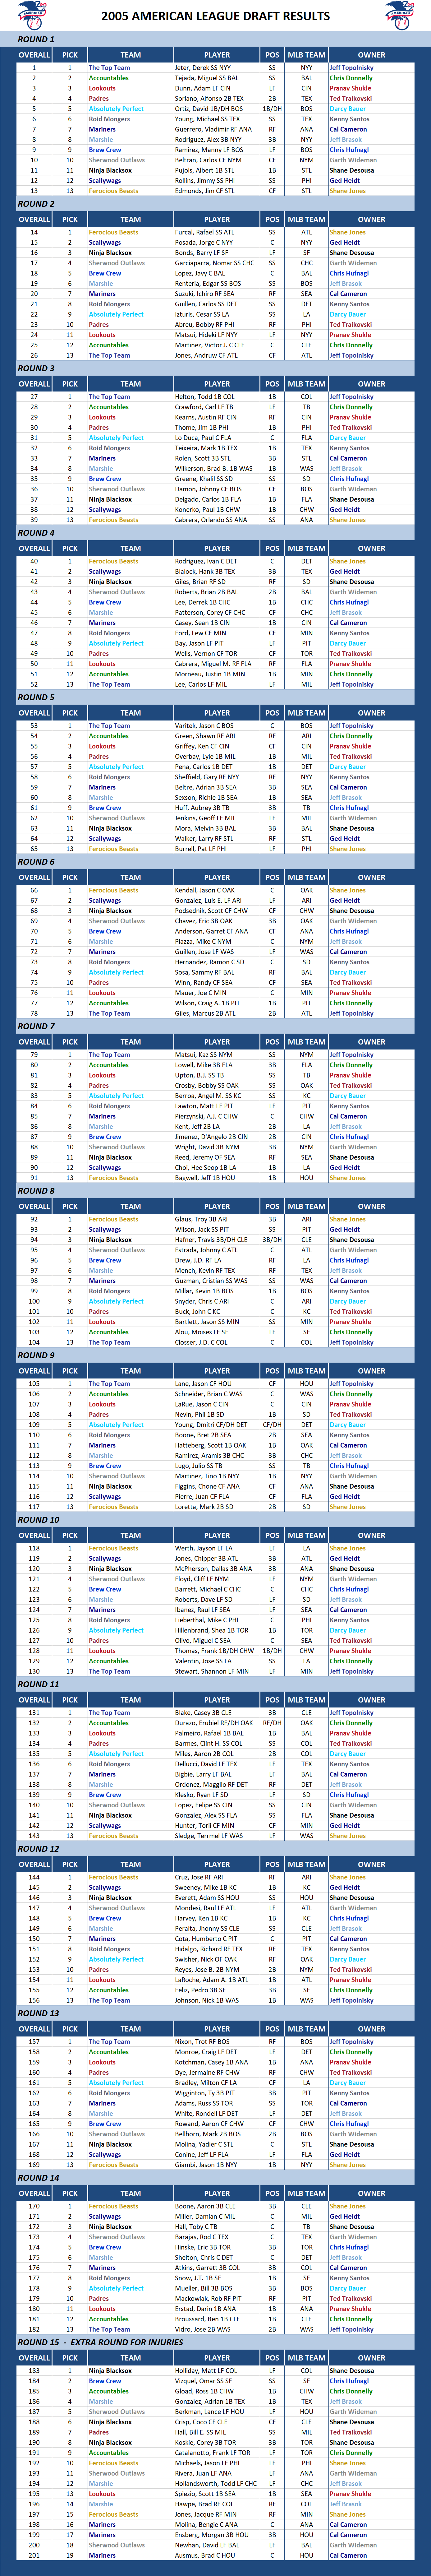 2005 Major league Baseball Draft Results